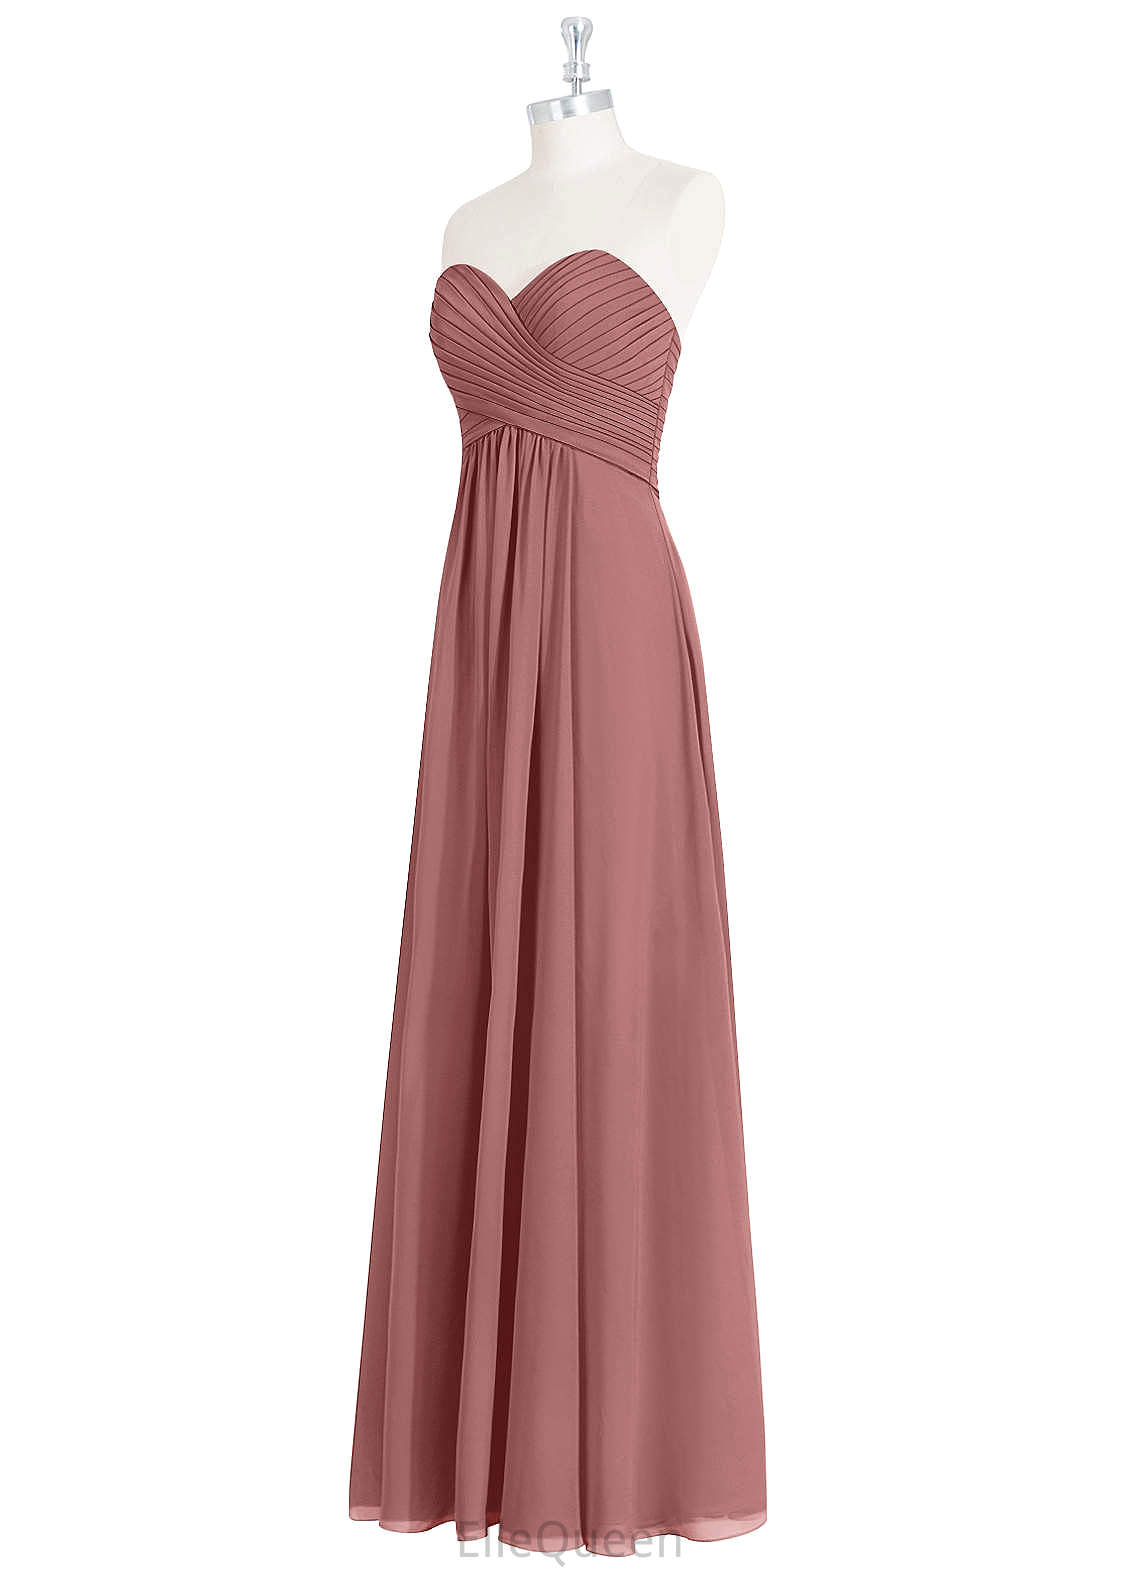 Emery Sleeveless Natural Waist One Shoulder A-Line/Princess Floor Length Bridesmaid Dresses